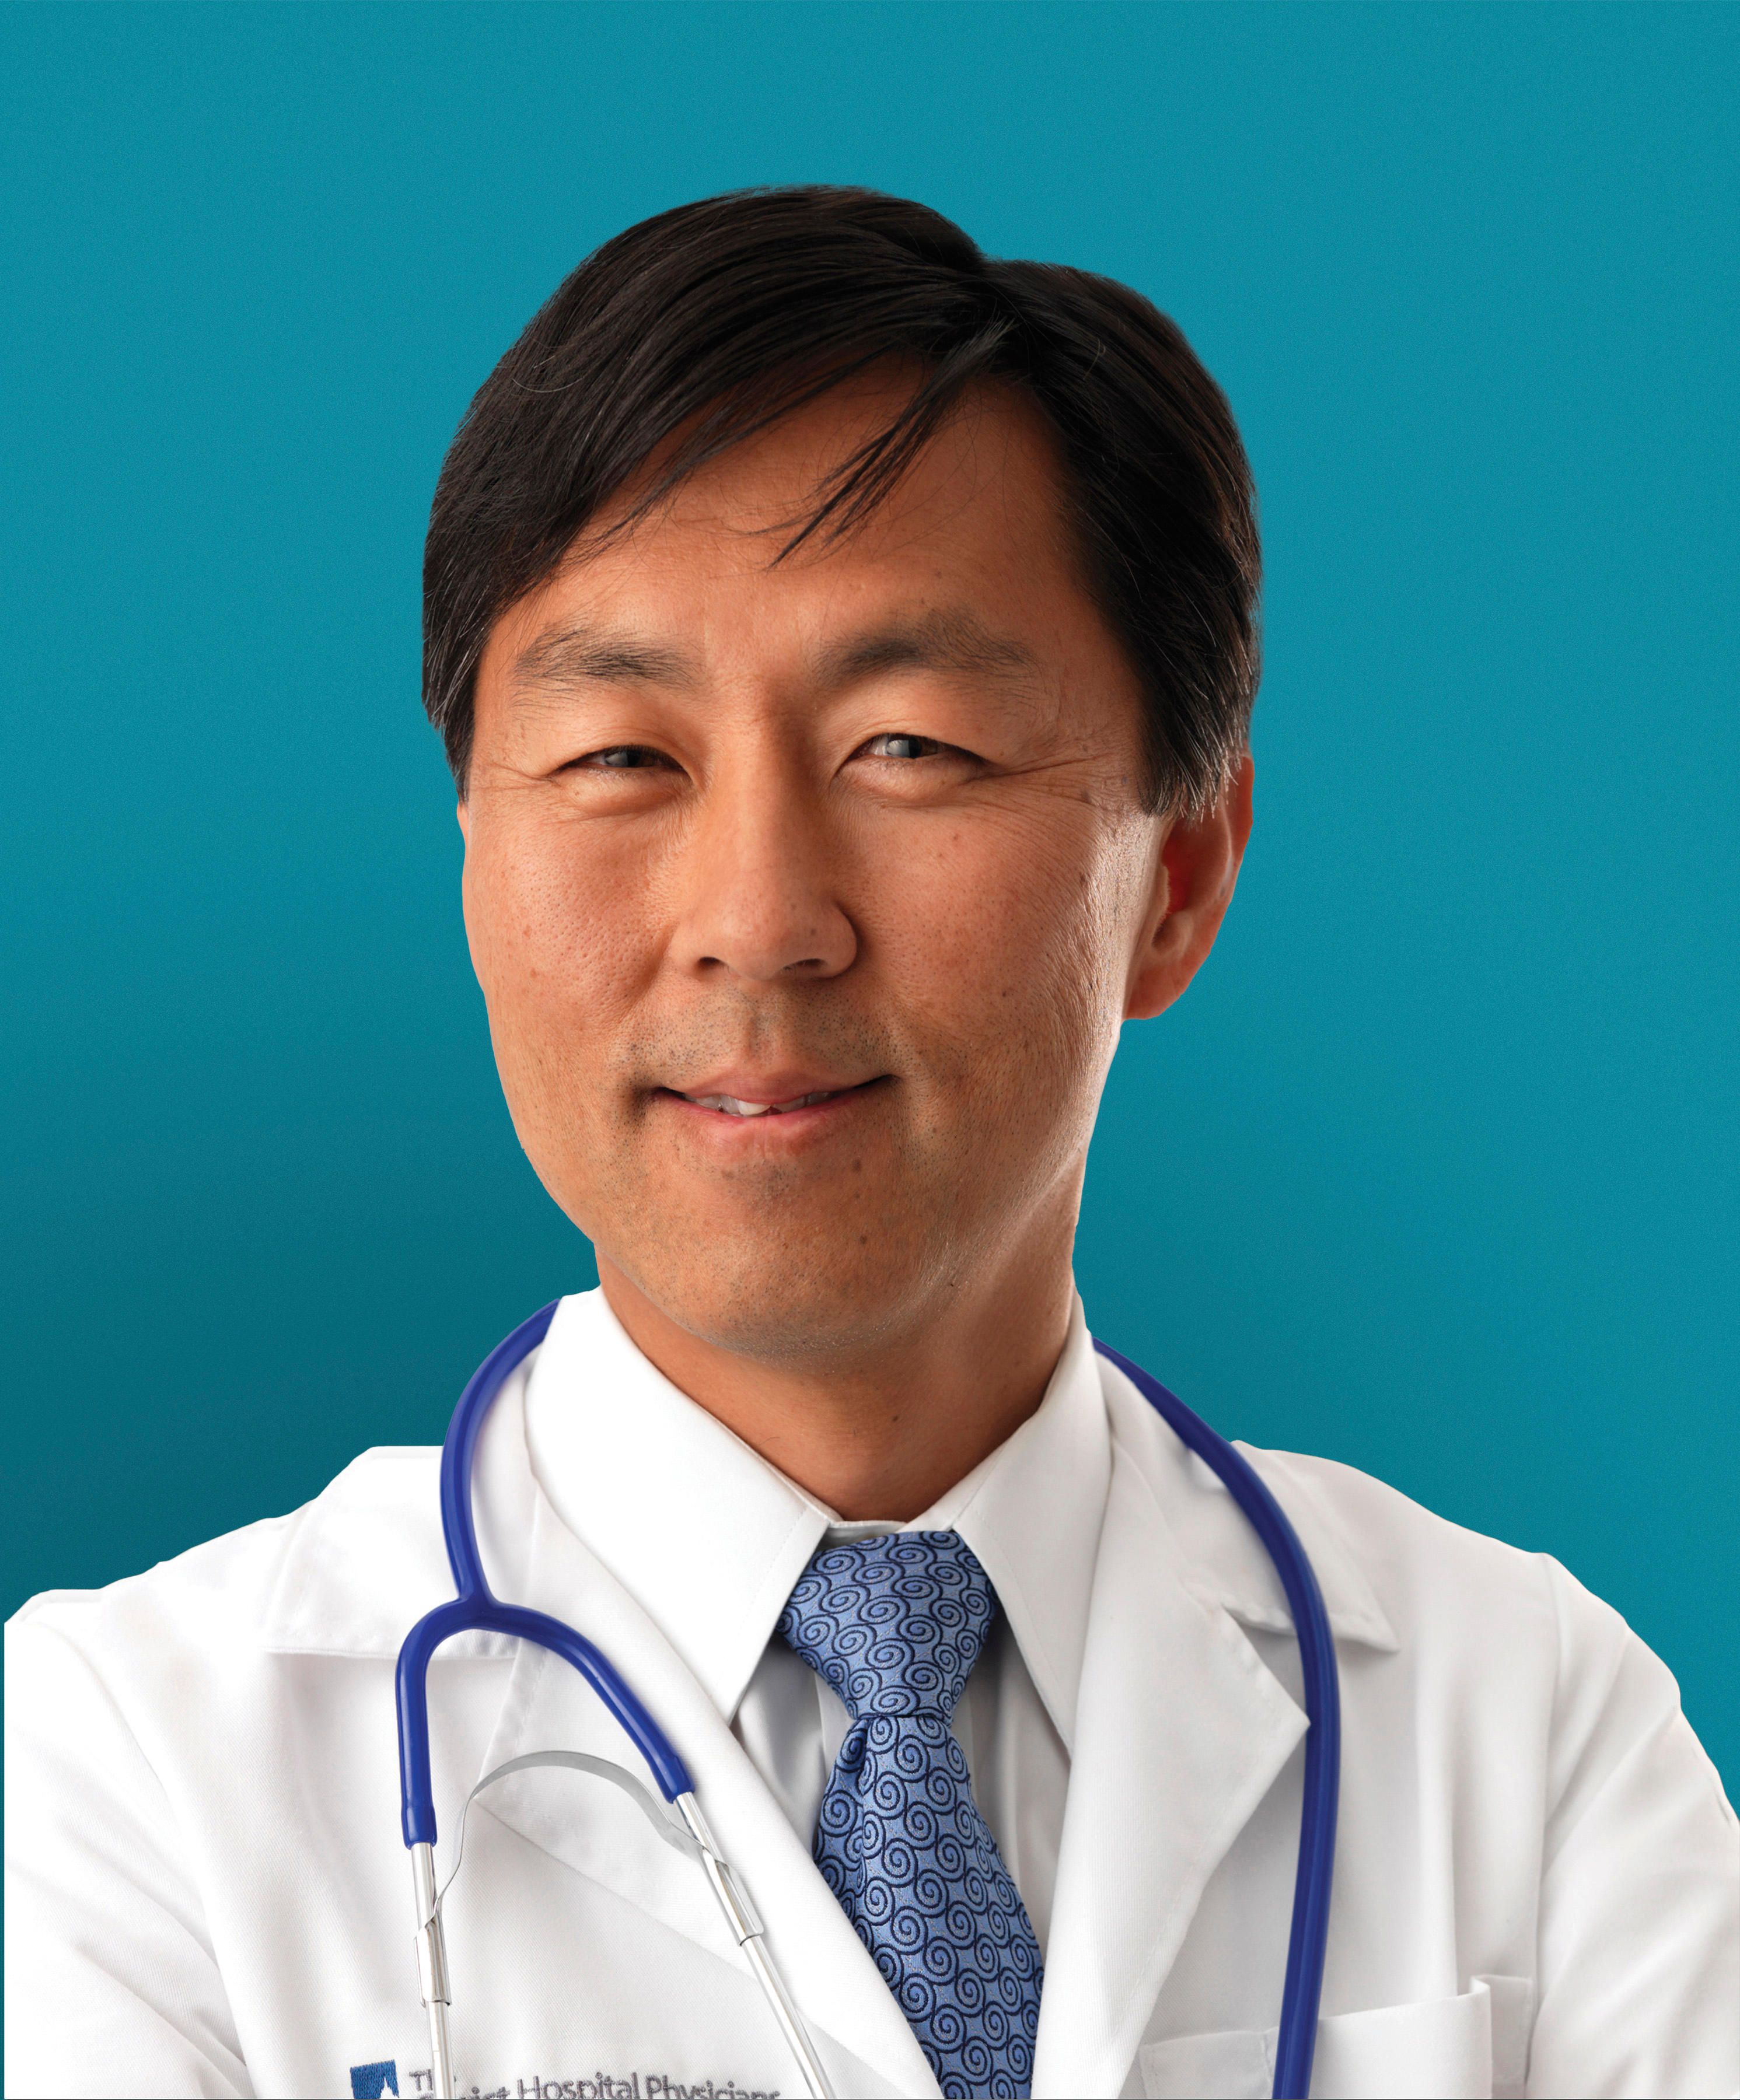 Eugene S. Chung, MD